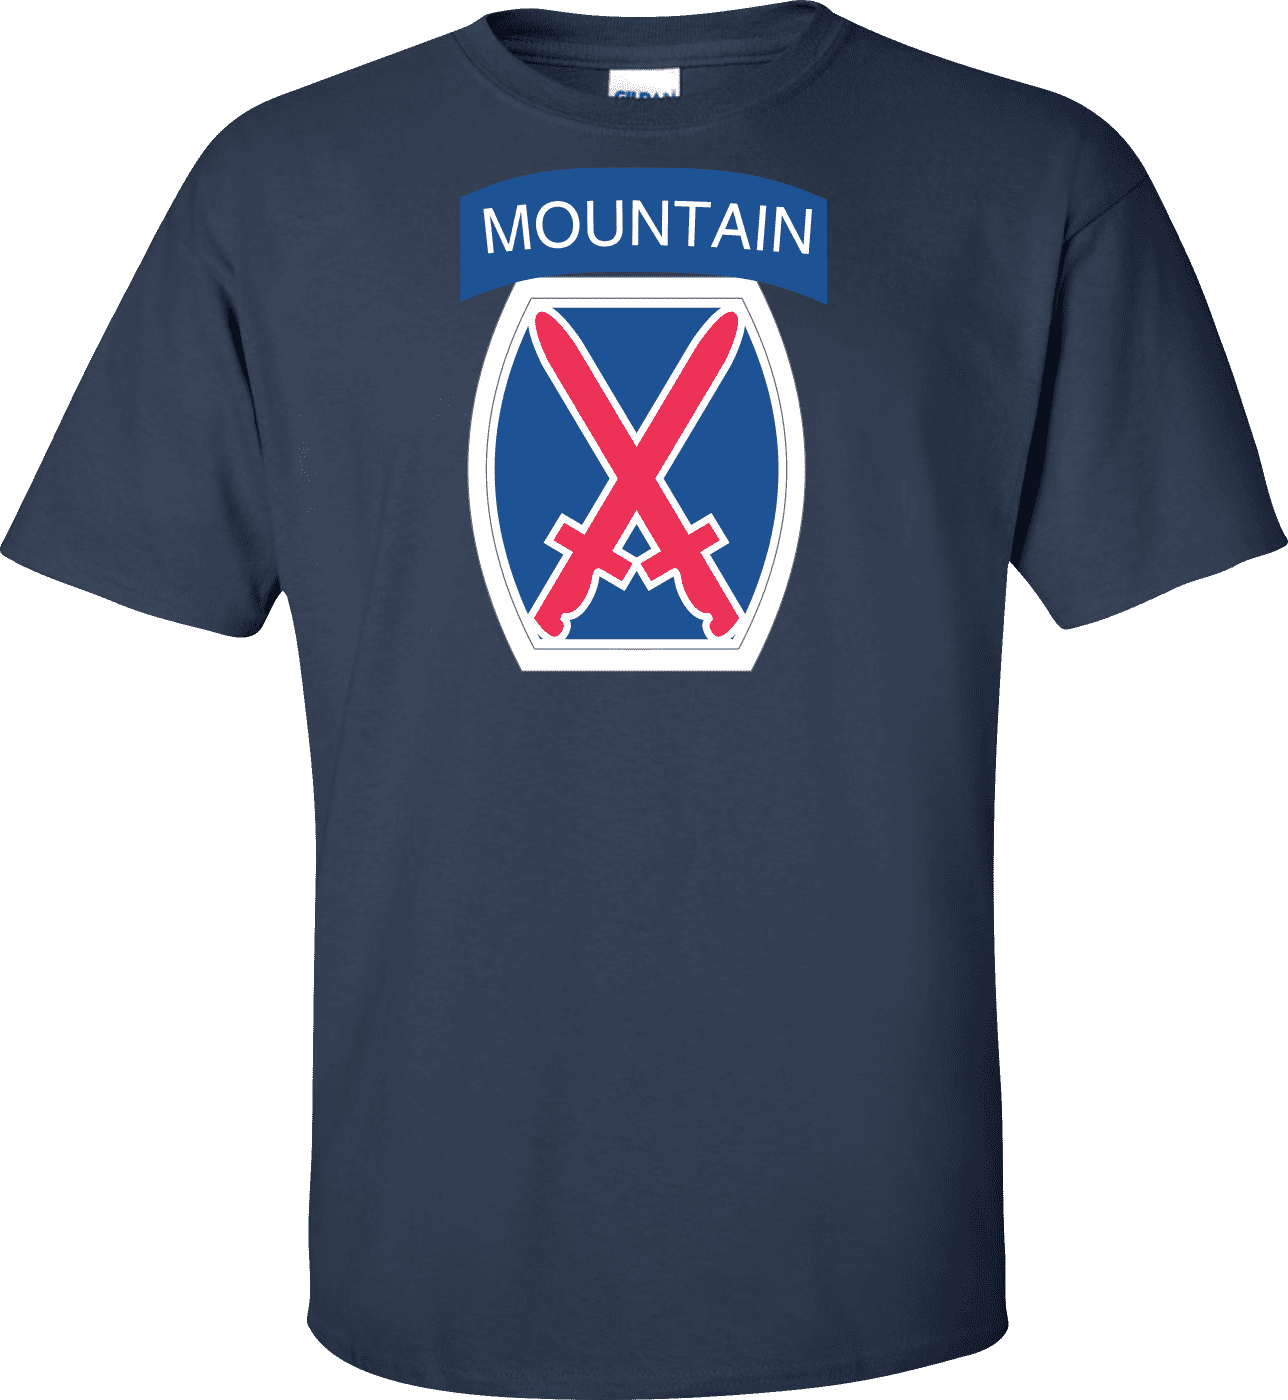 10th mountain shirt